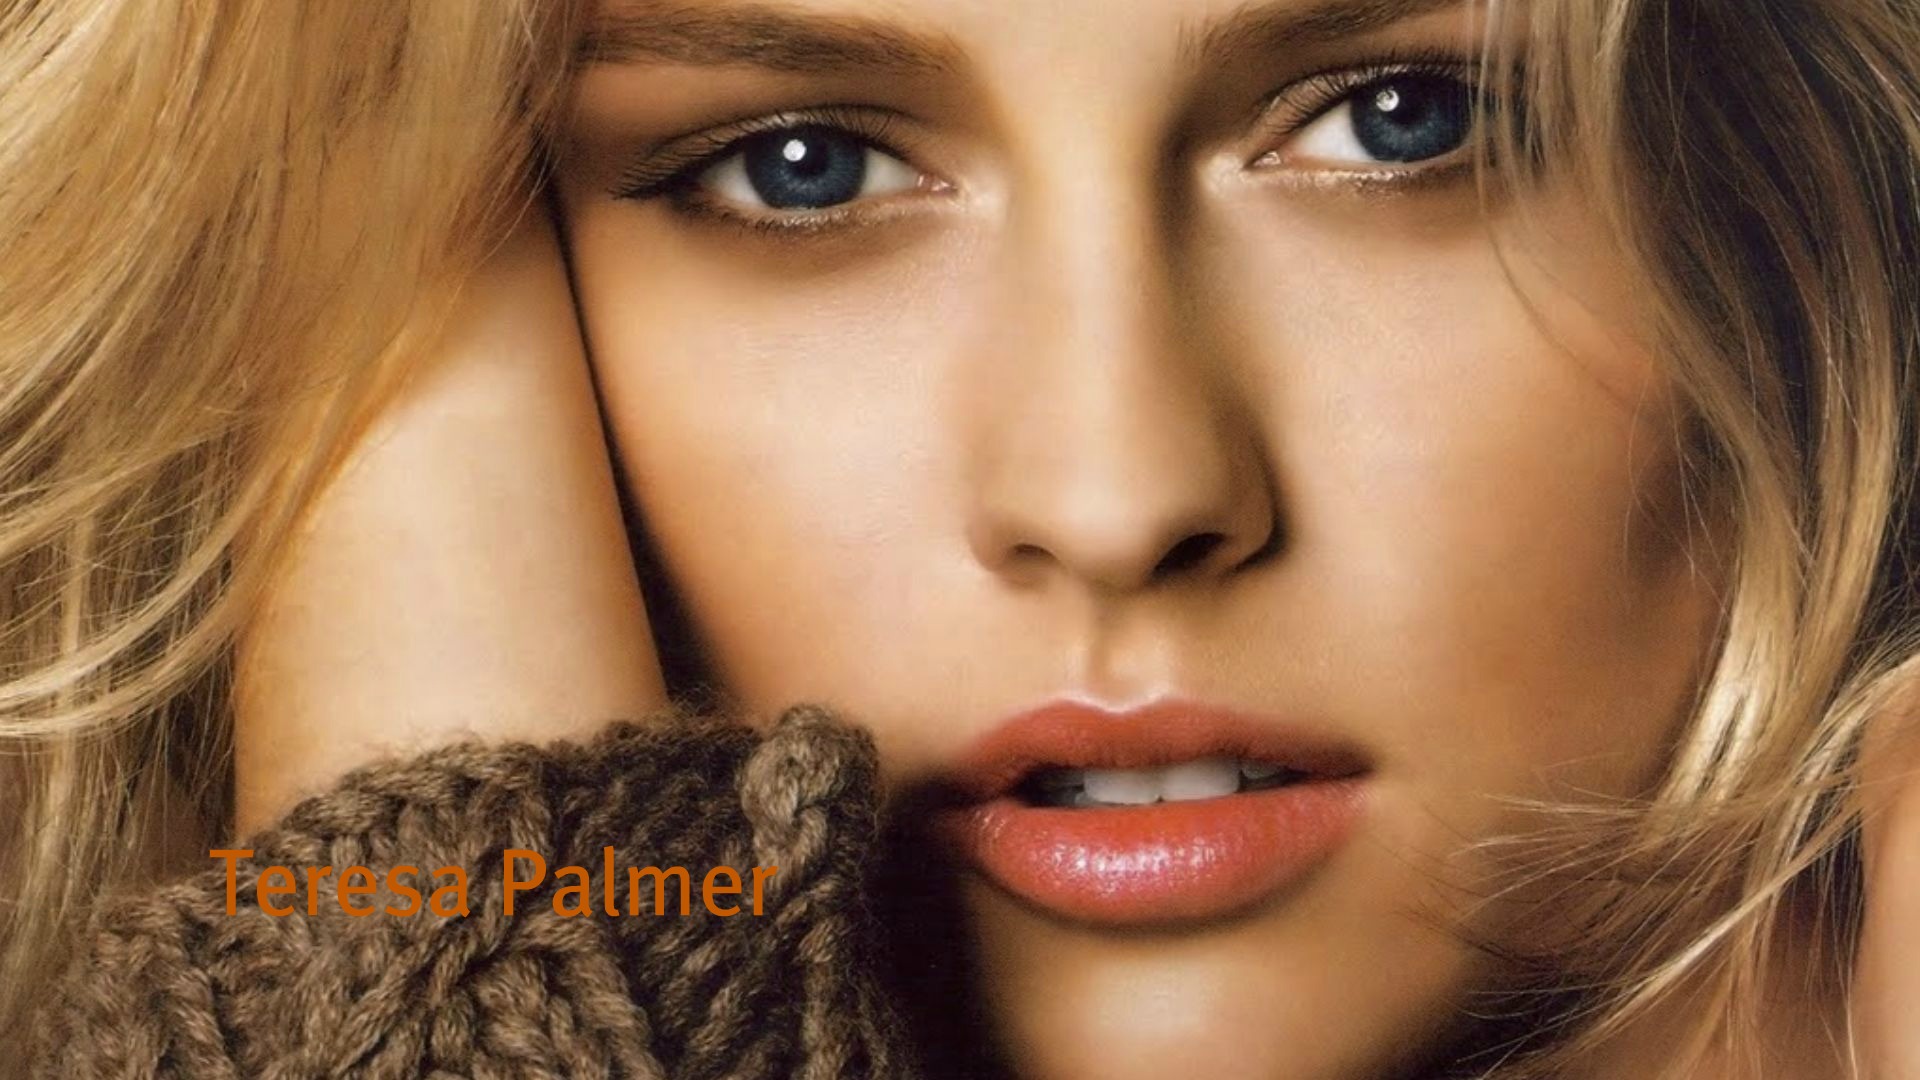 Teresa Palmer HD Wallpaper | Background Image | 1920x1080 ...